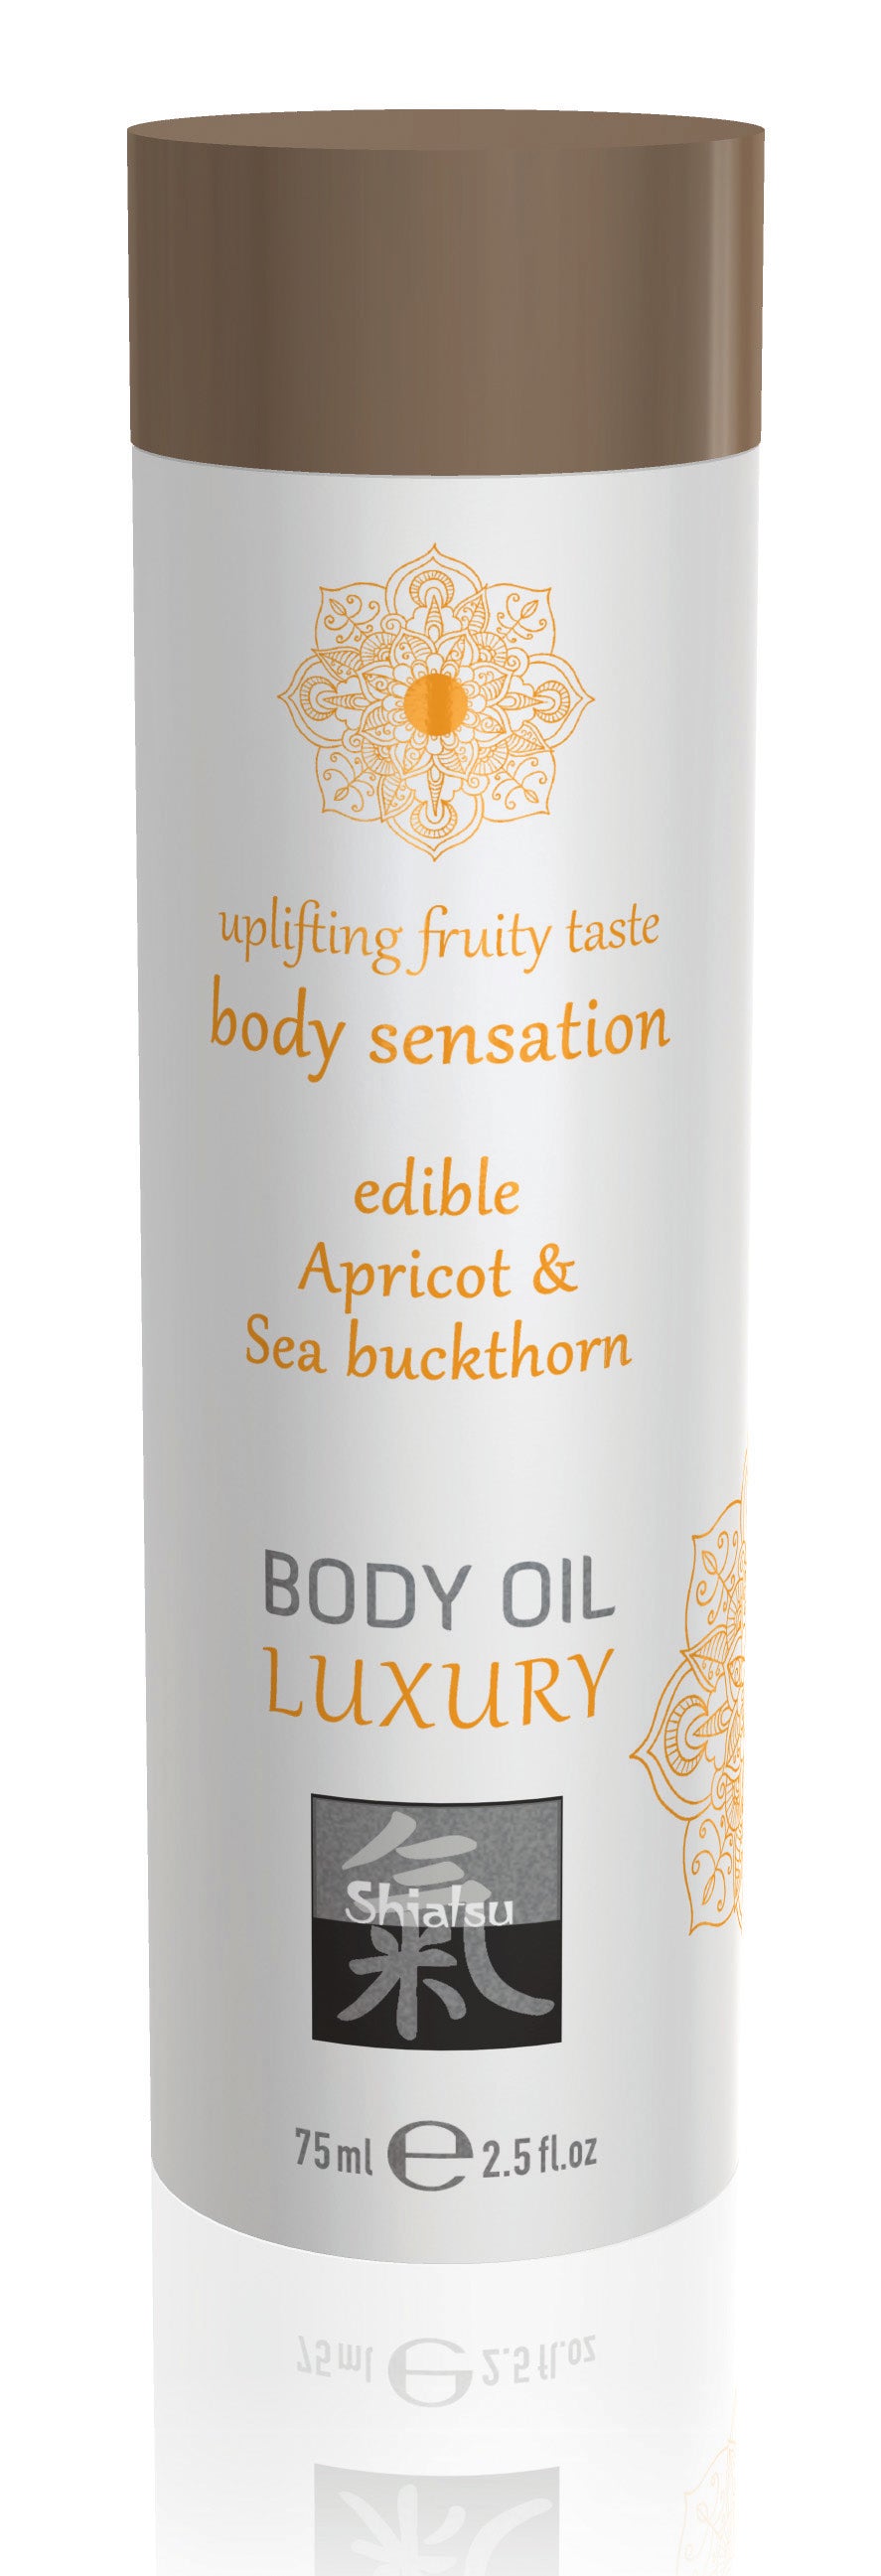 Shiatsu Luxury Body Oil Edible Apricot and Sea Buckthorn